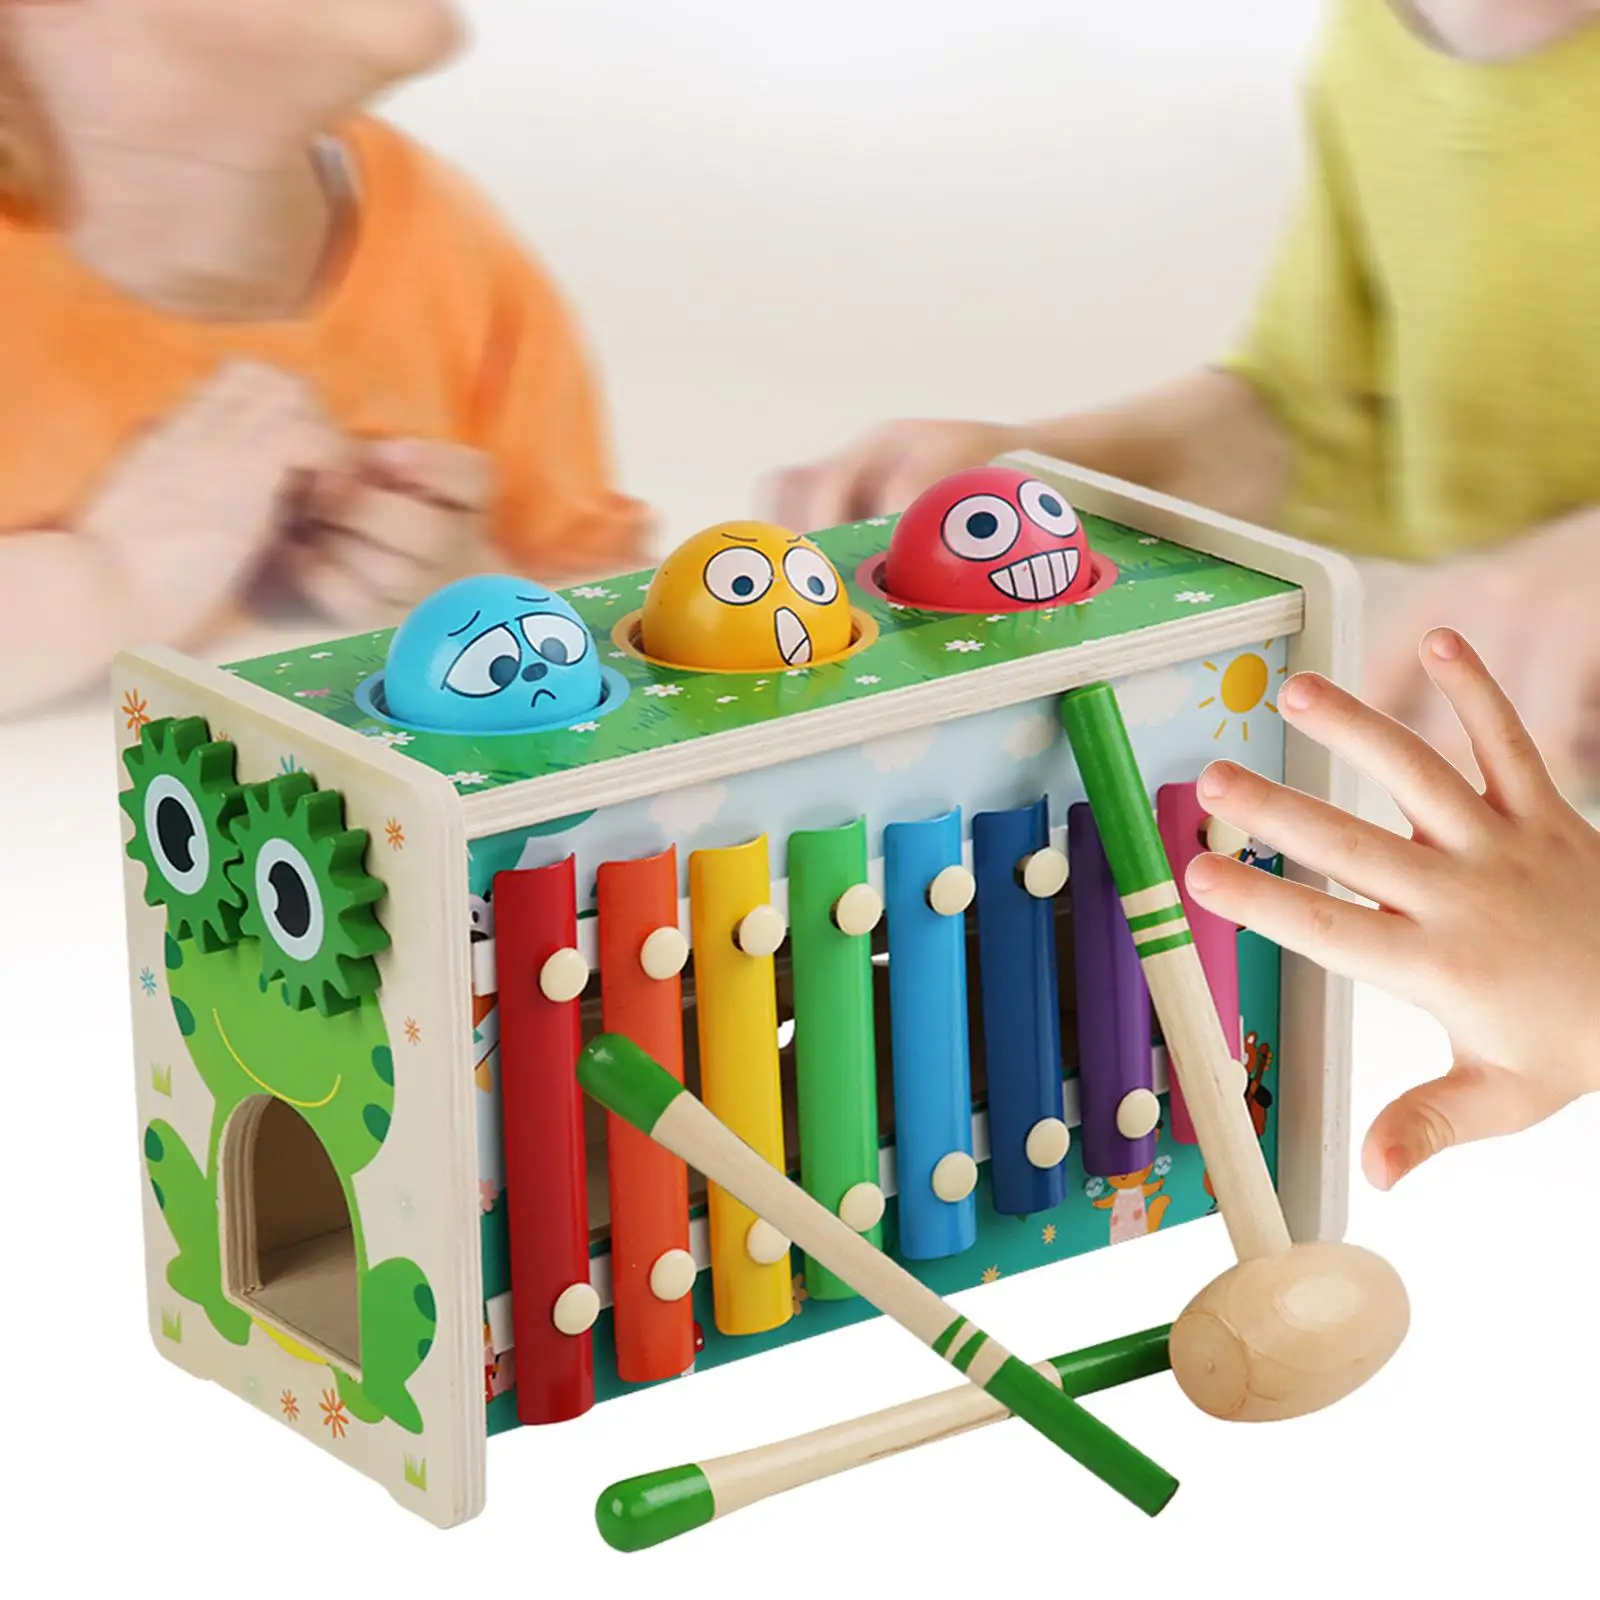 

Hammering Pounding Toy Fine Motor Skill 5 in 1 Wooden Montessori Toys Track for Kids Party Toy Boys Girls Children Preschool